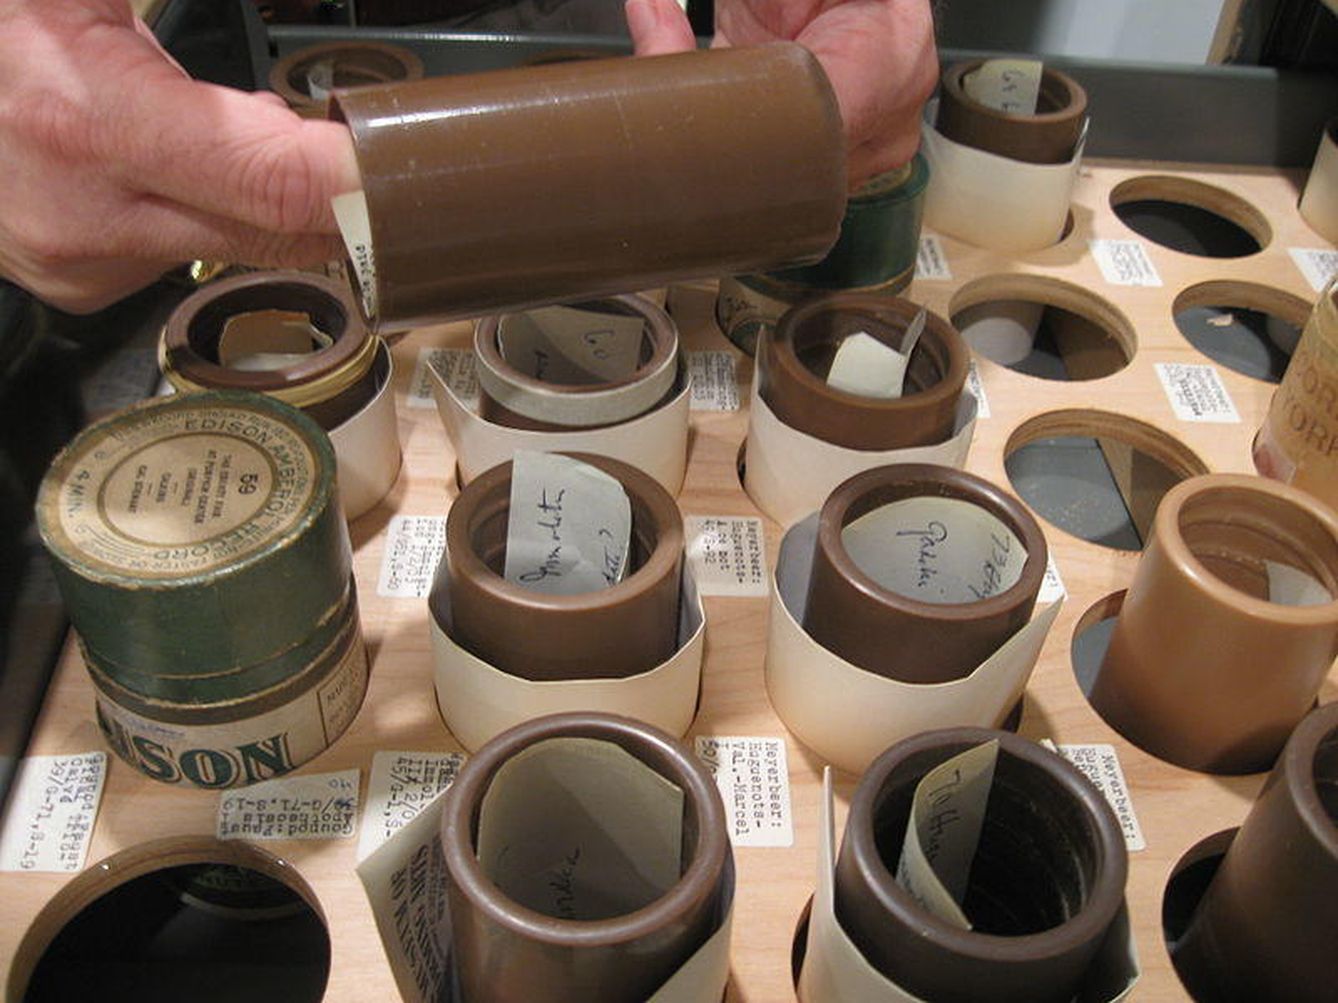 Los cilindros de Mapleson. (Wikimedia Commons)